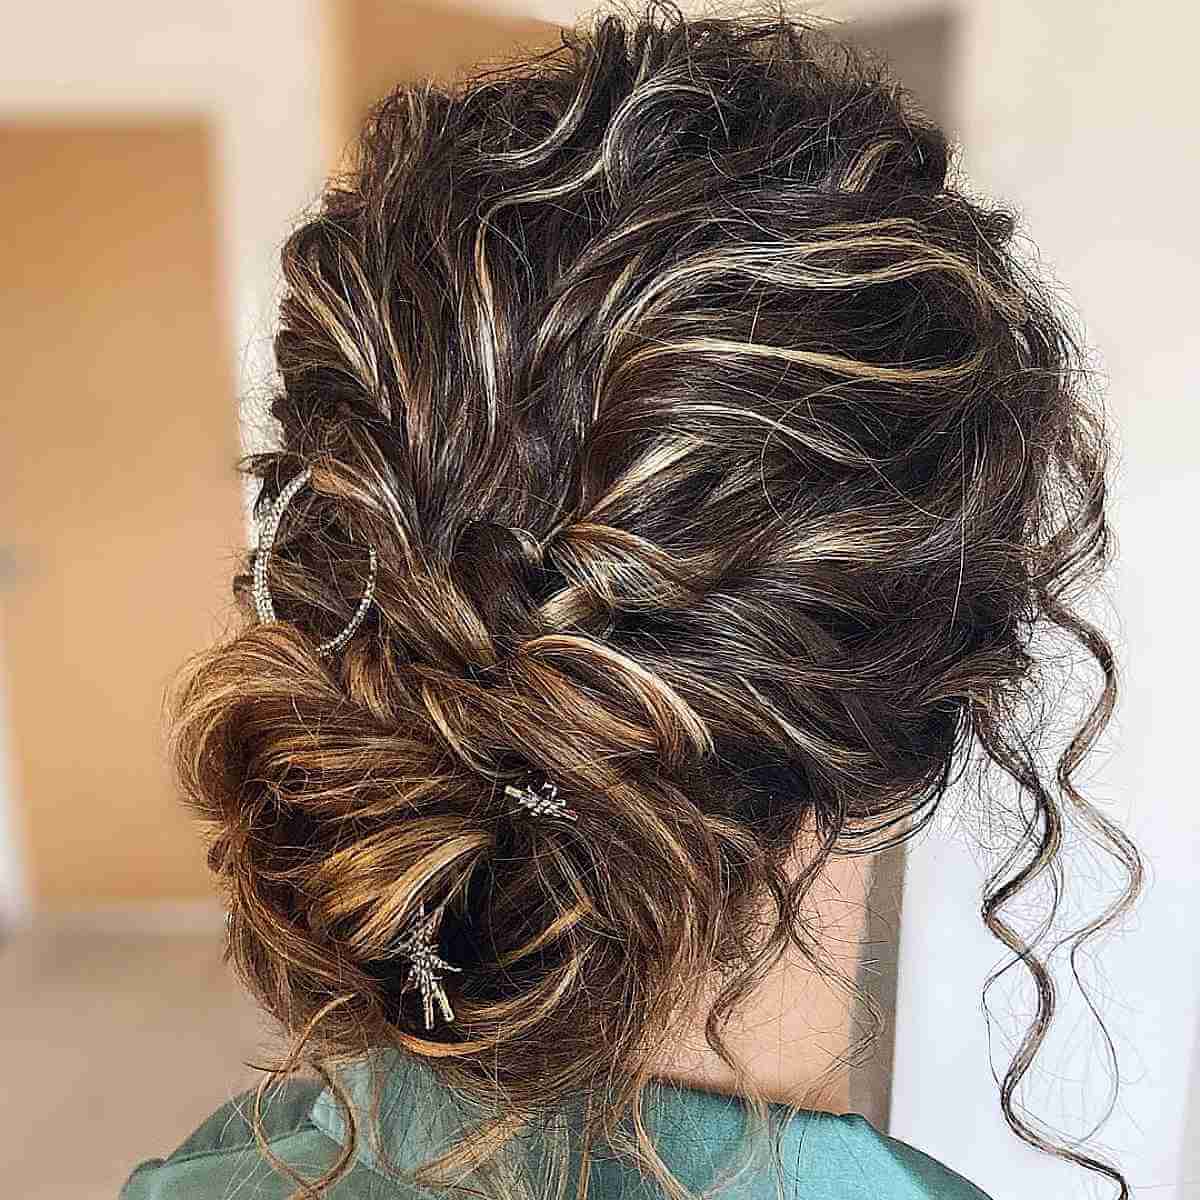 Stunning curly braided bun